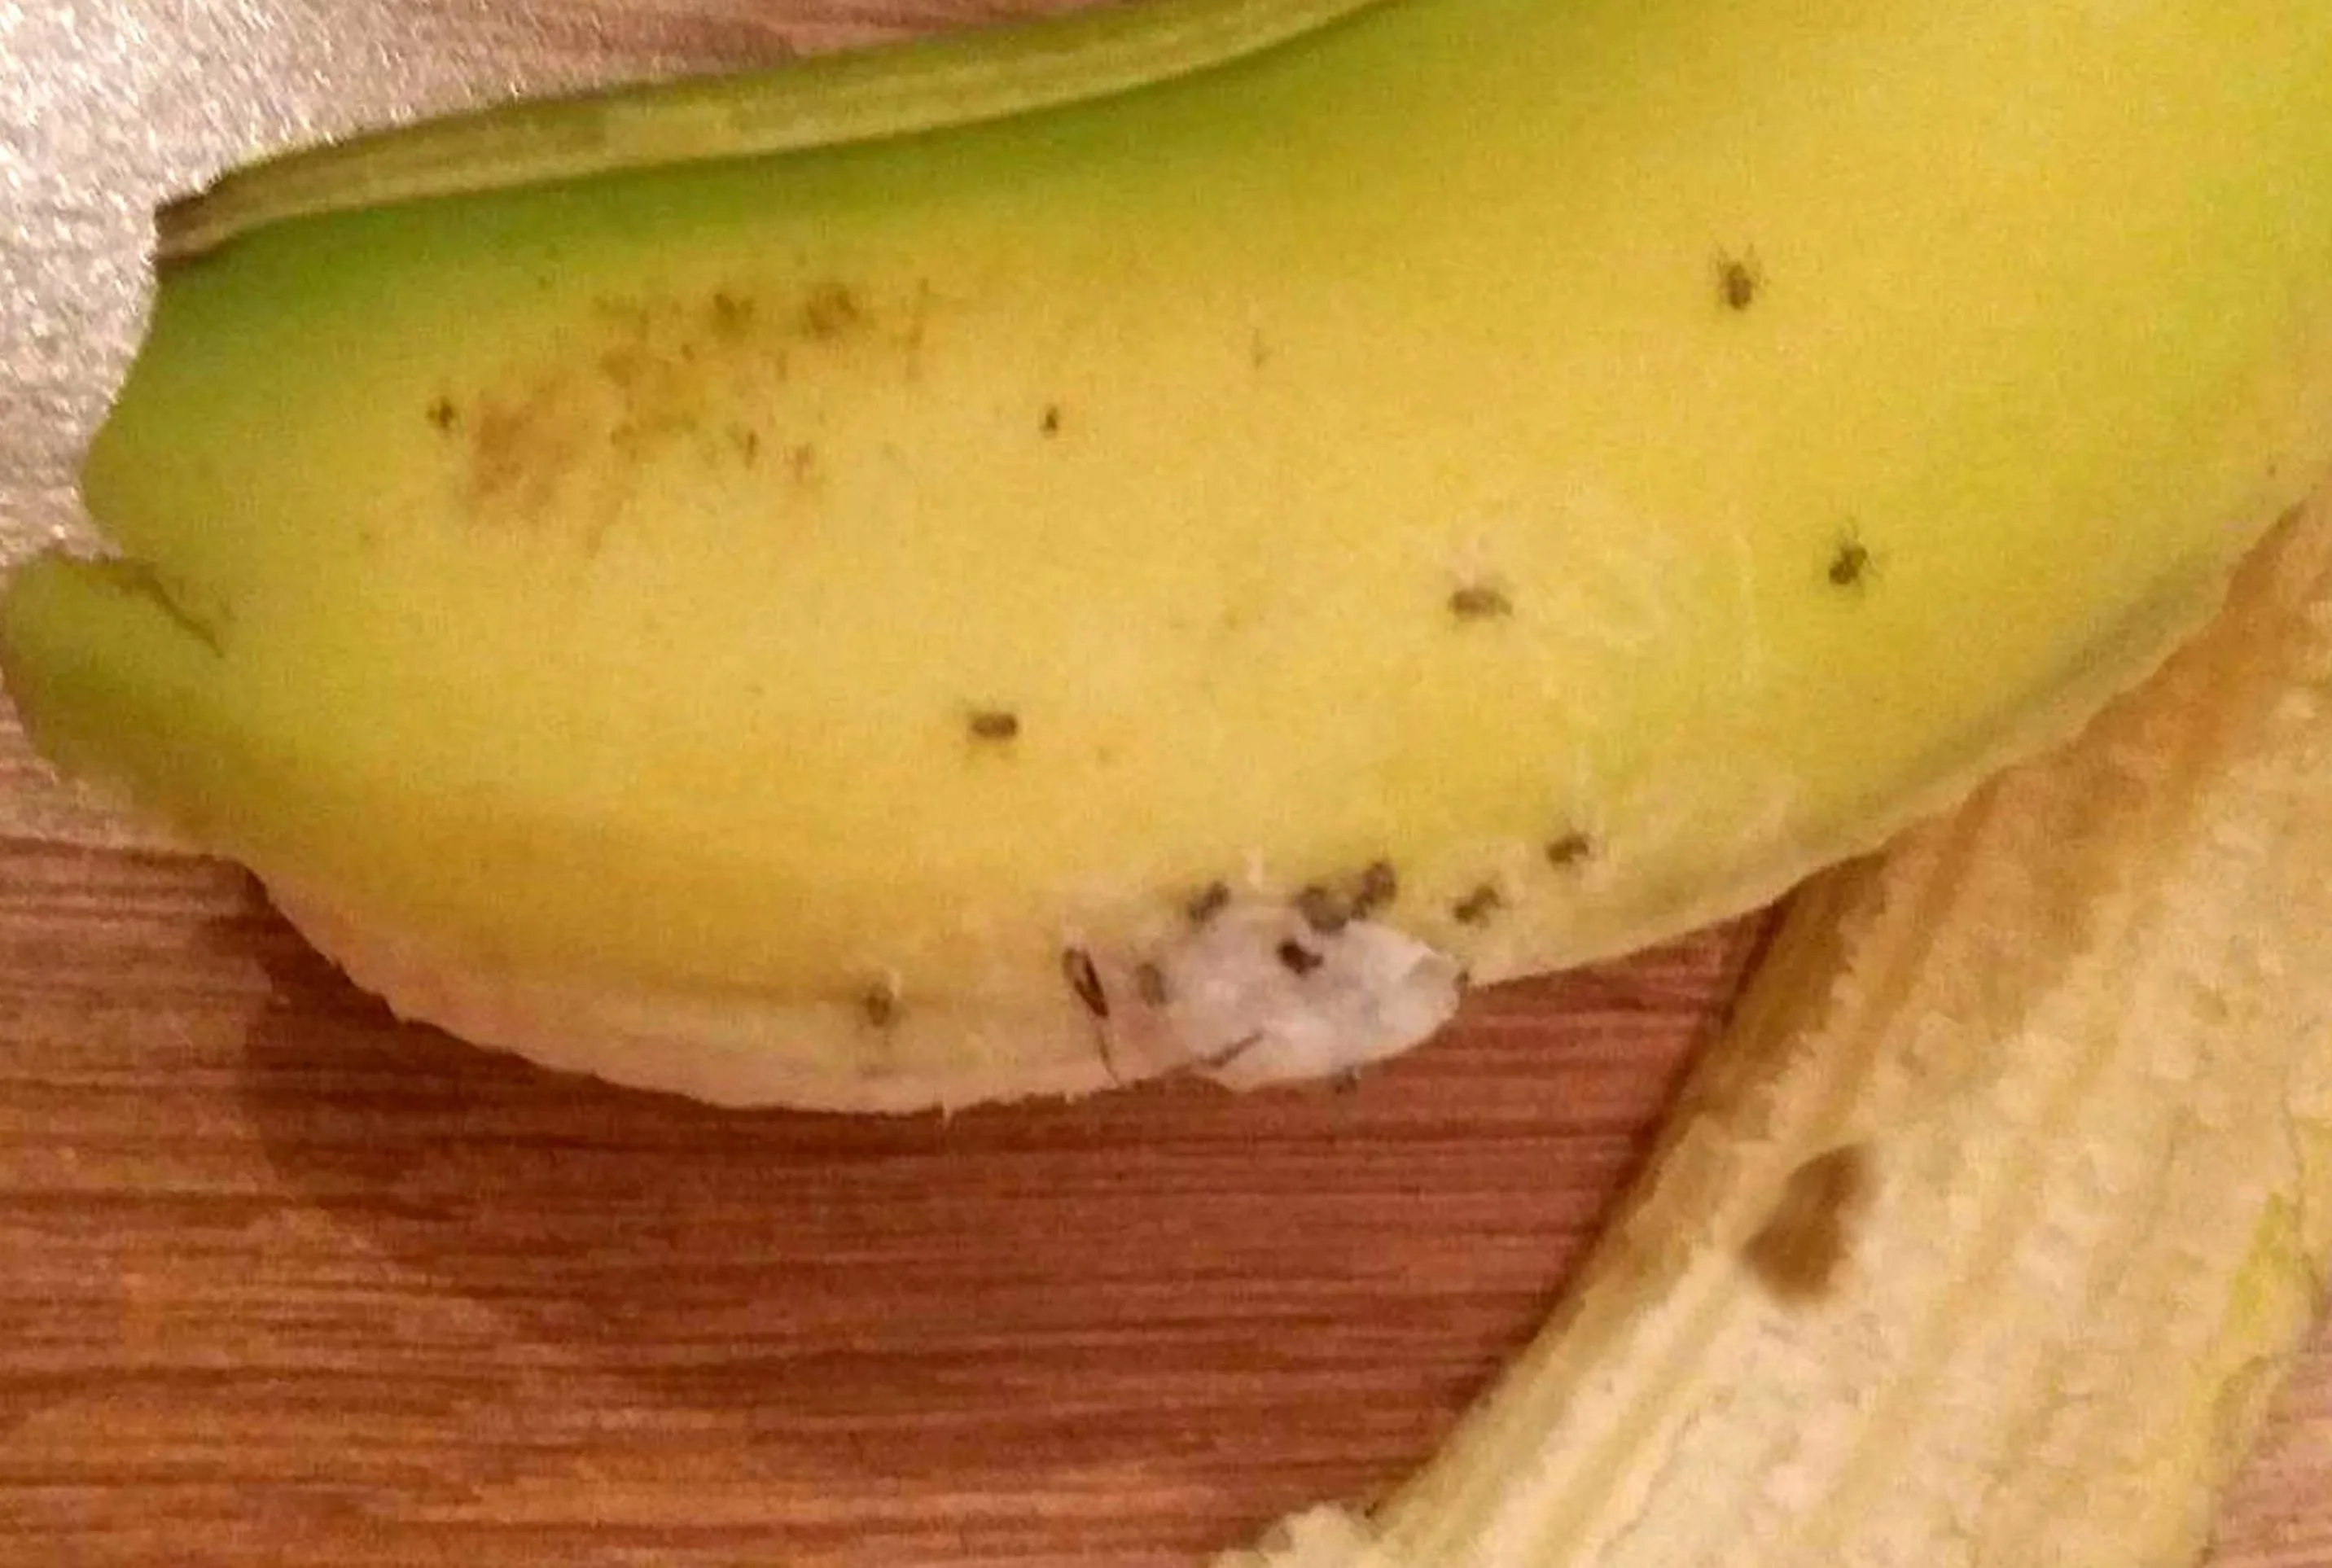 How Do Spiders Get Into Bananas?